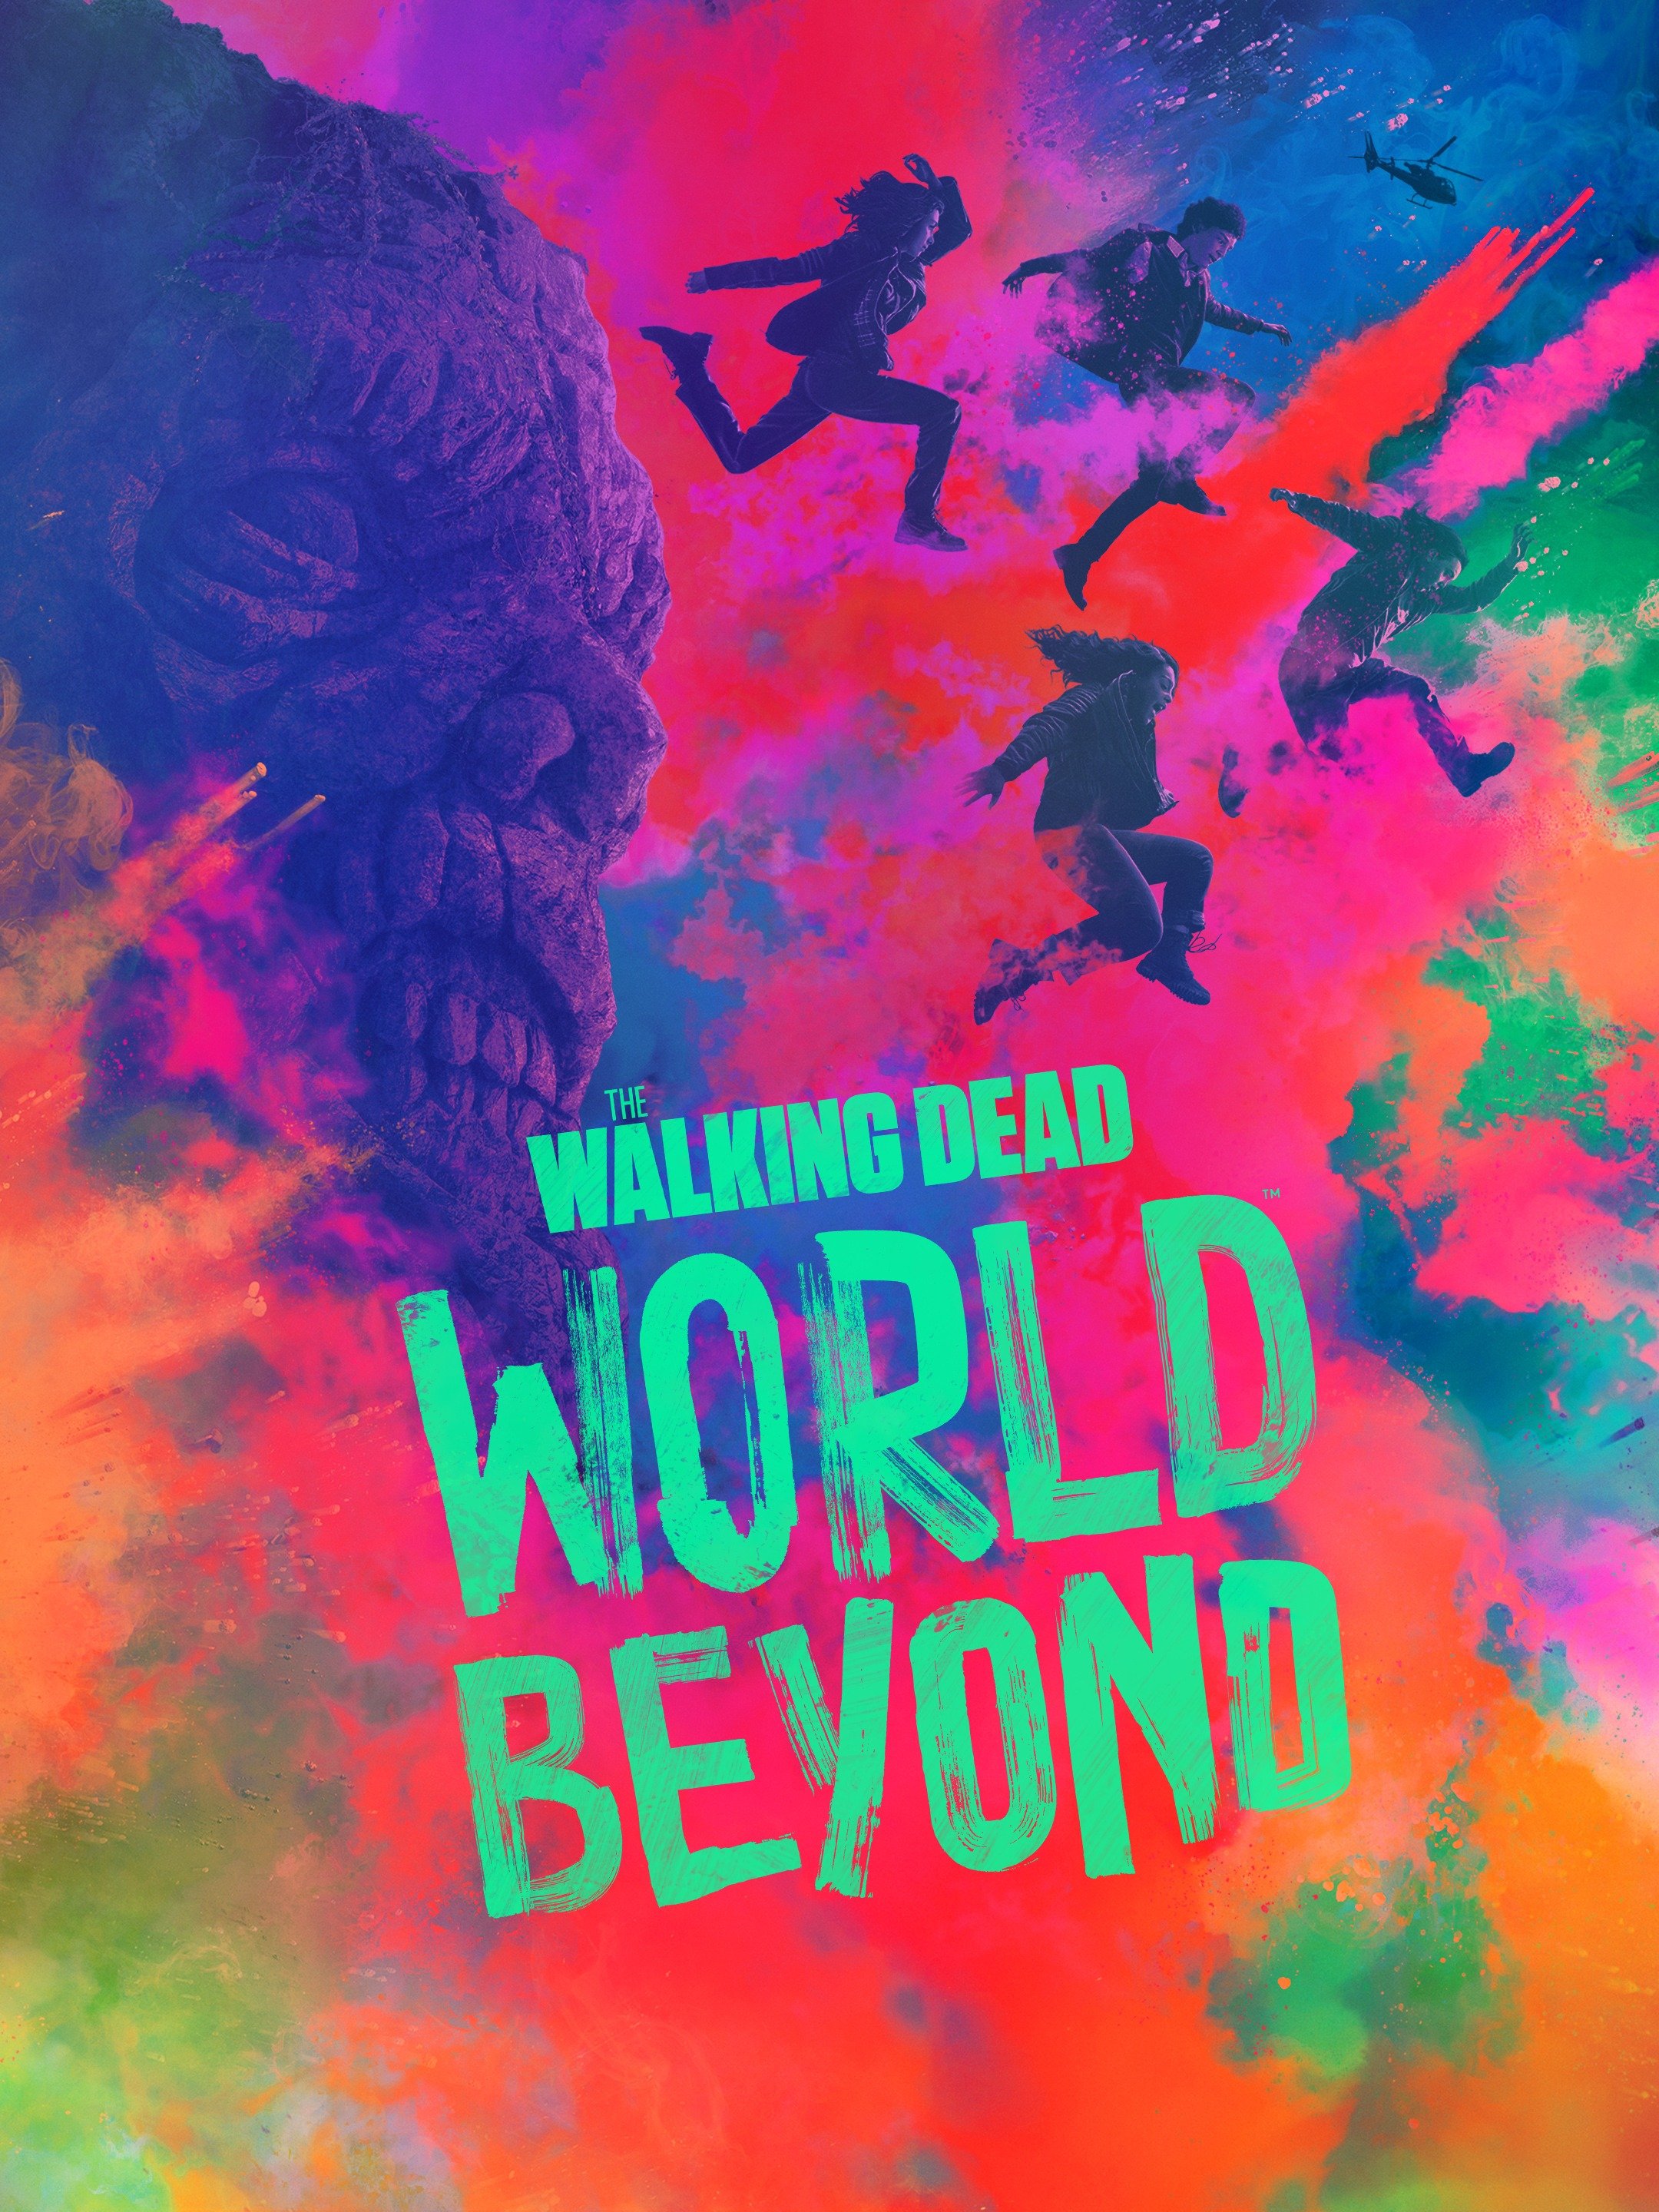 The Walking Dead: World Beyond